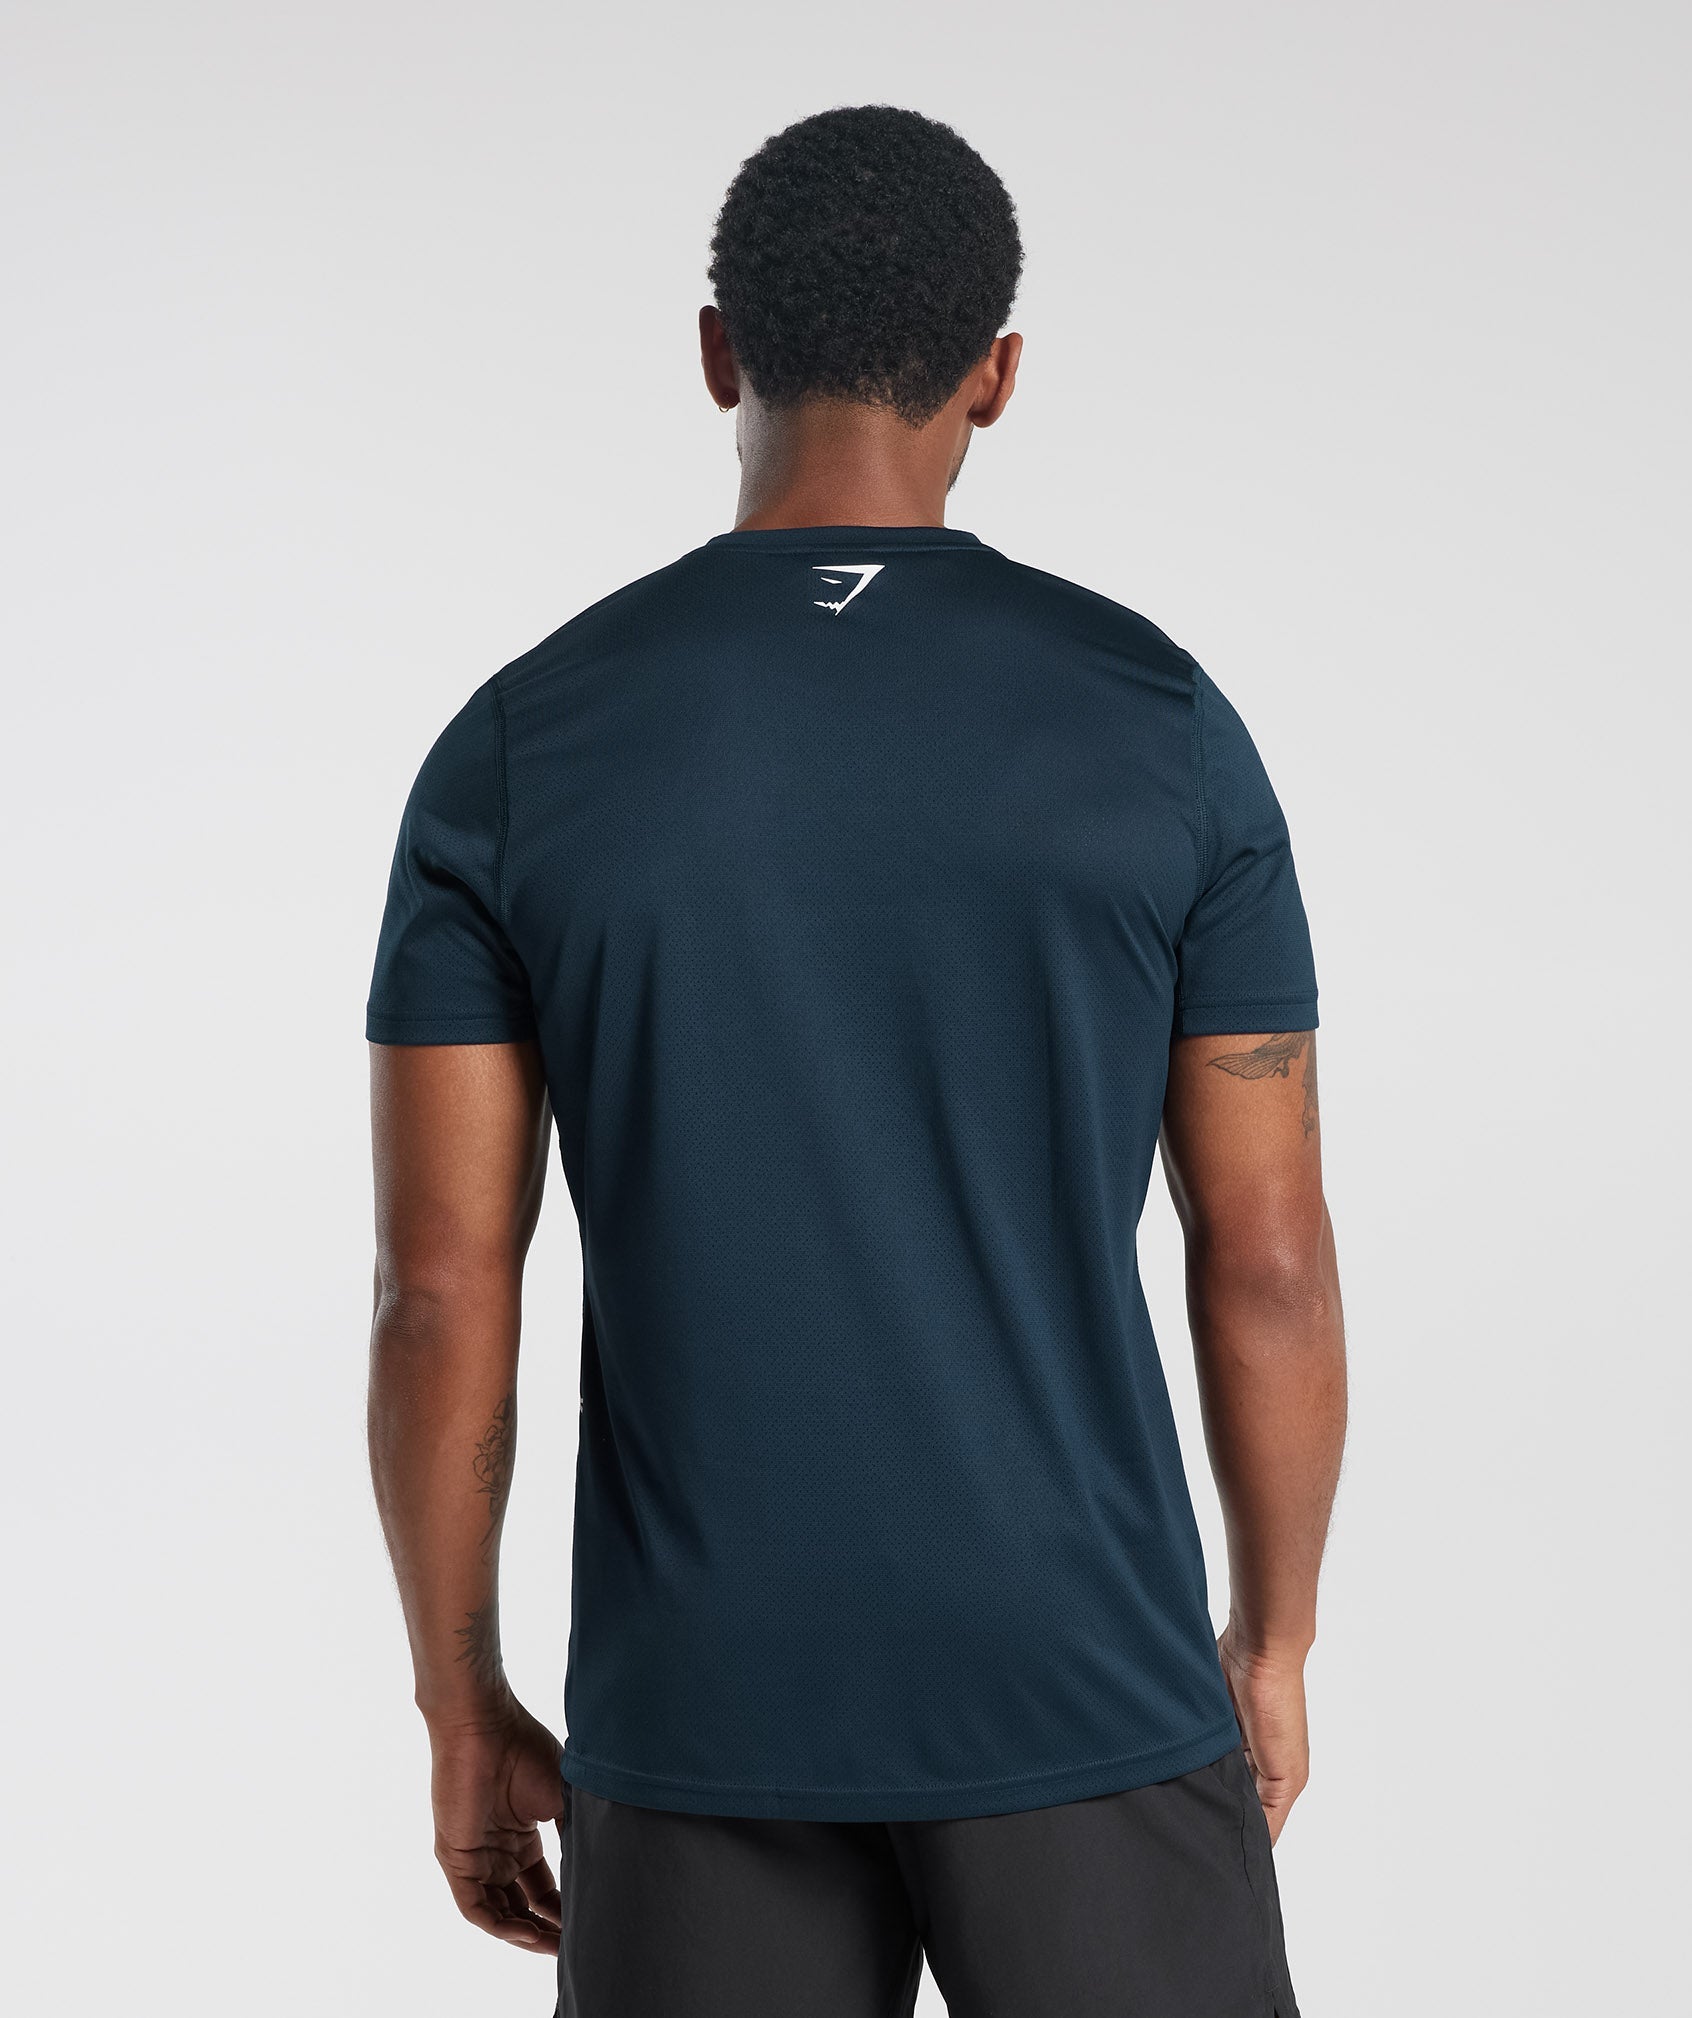 Sport T-Shirt in Navy/Black Marl - view 2